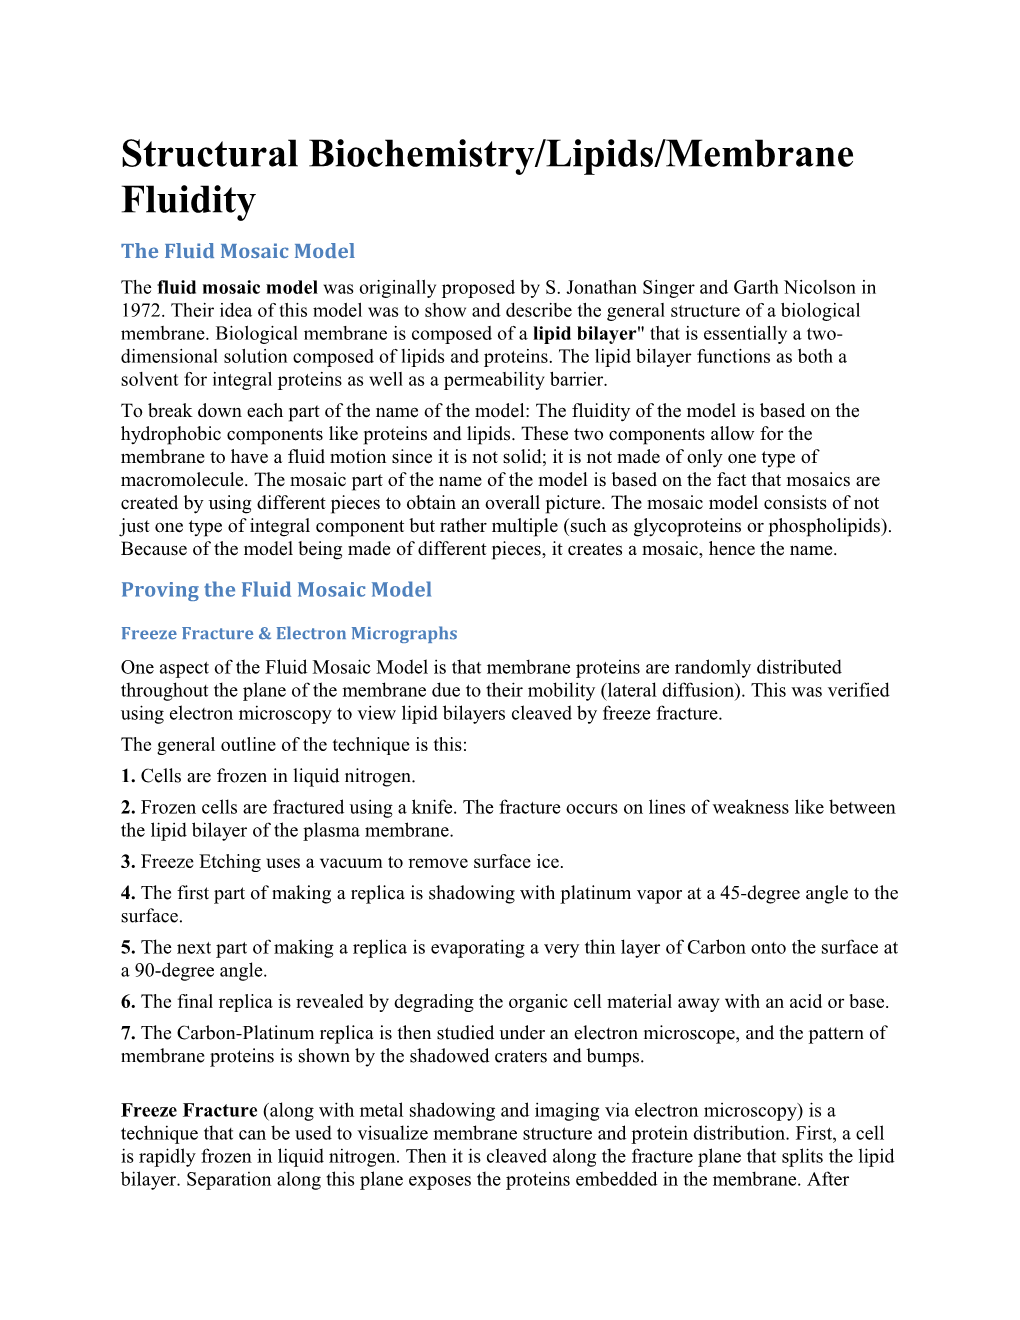 Structural Biochemistry/Lipids/Membrane Fluidity